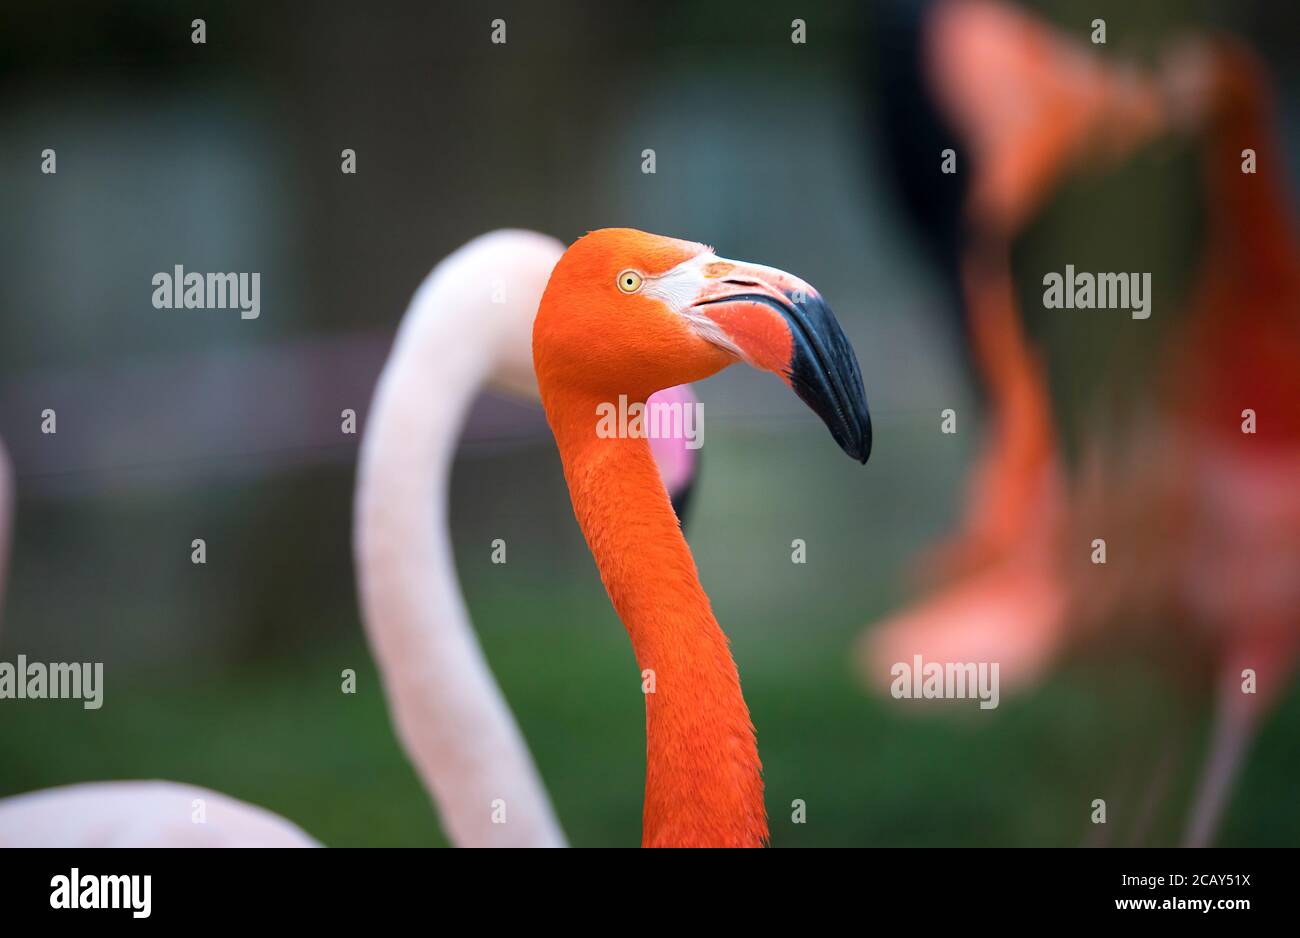 Flamingo bird close-up profile view, beautiful plumage, head, long neg, beak, eye in its surrounding and environment with water background, splashes i Stock Photo